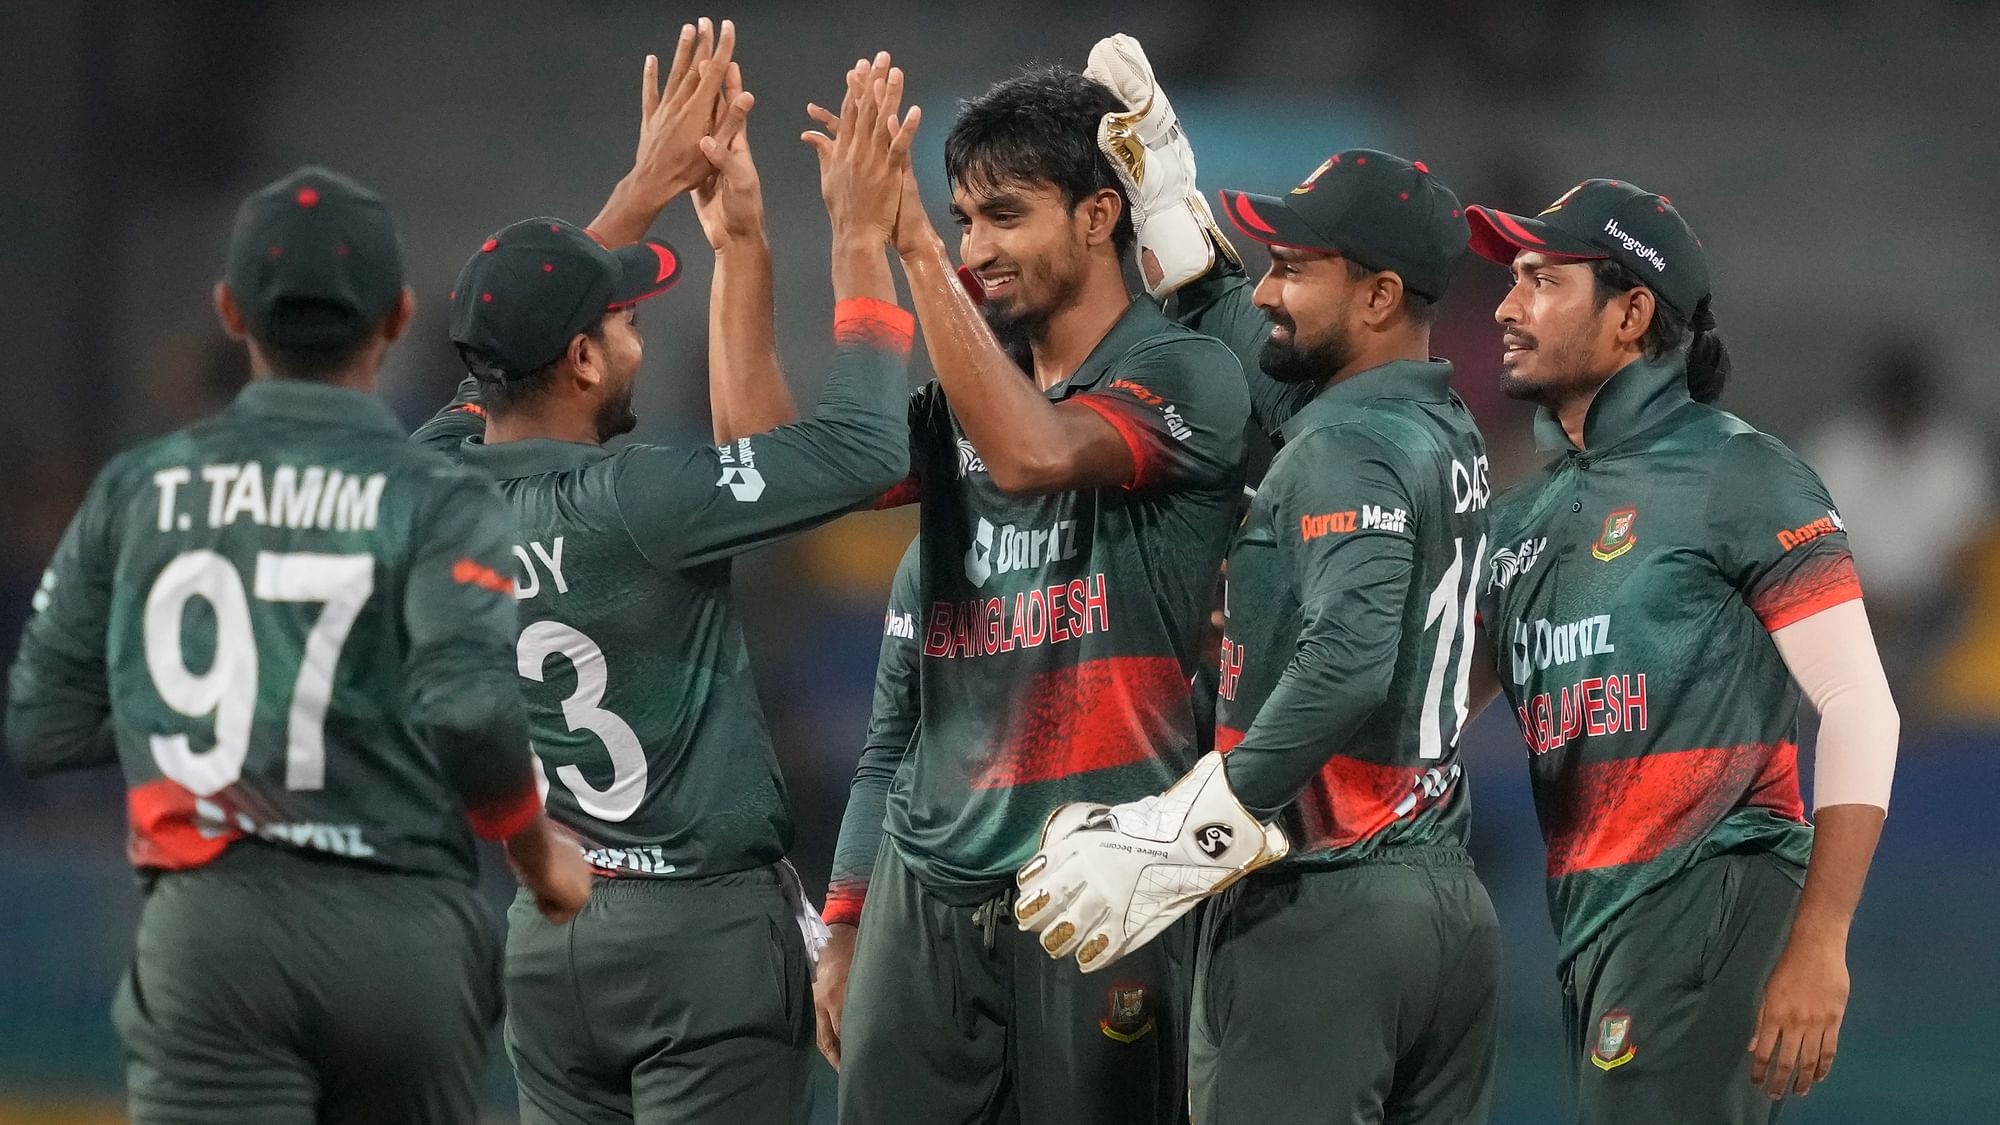 bangladesh west indies cricket match live video